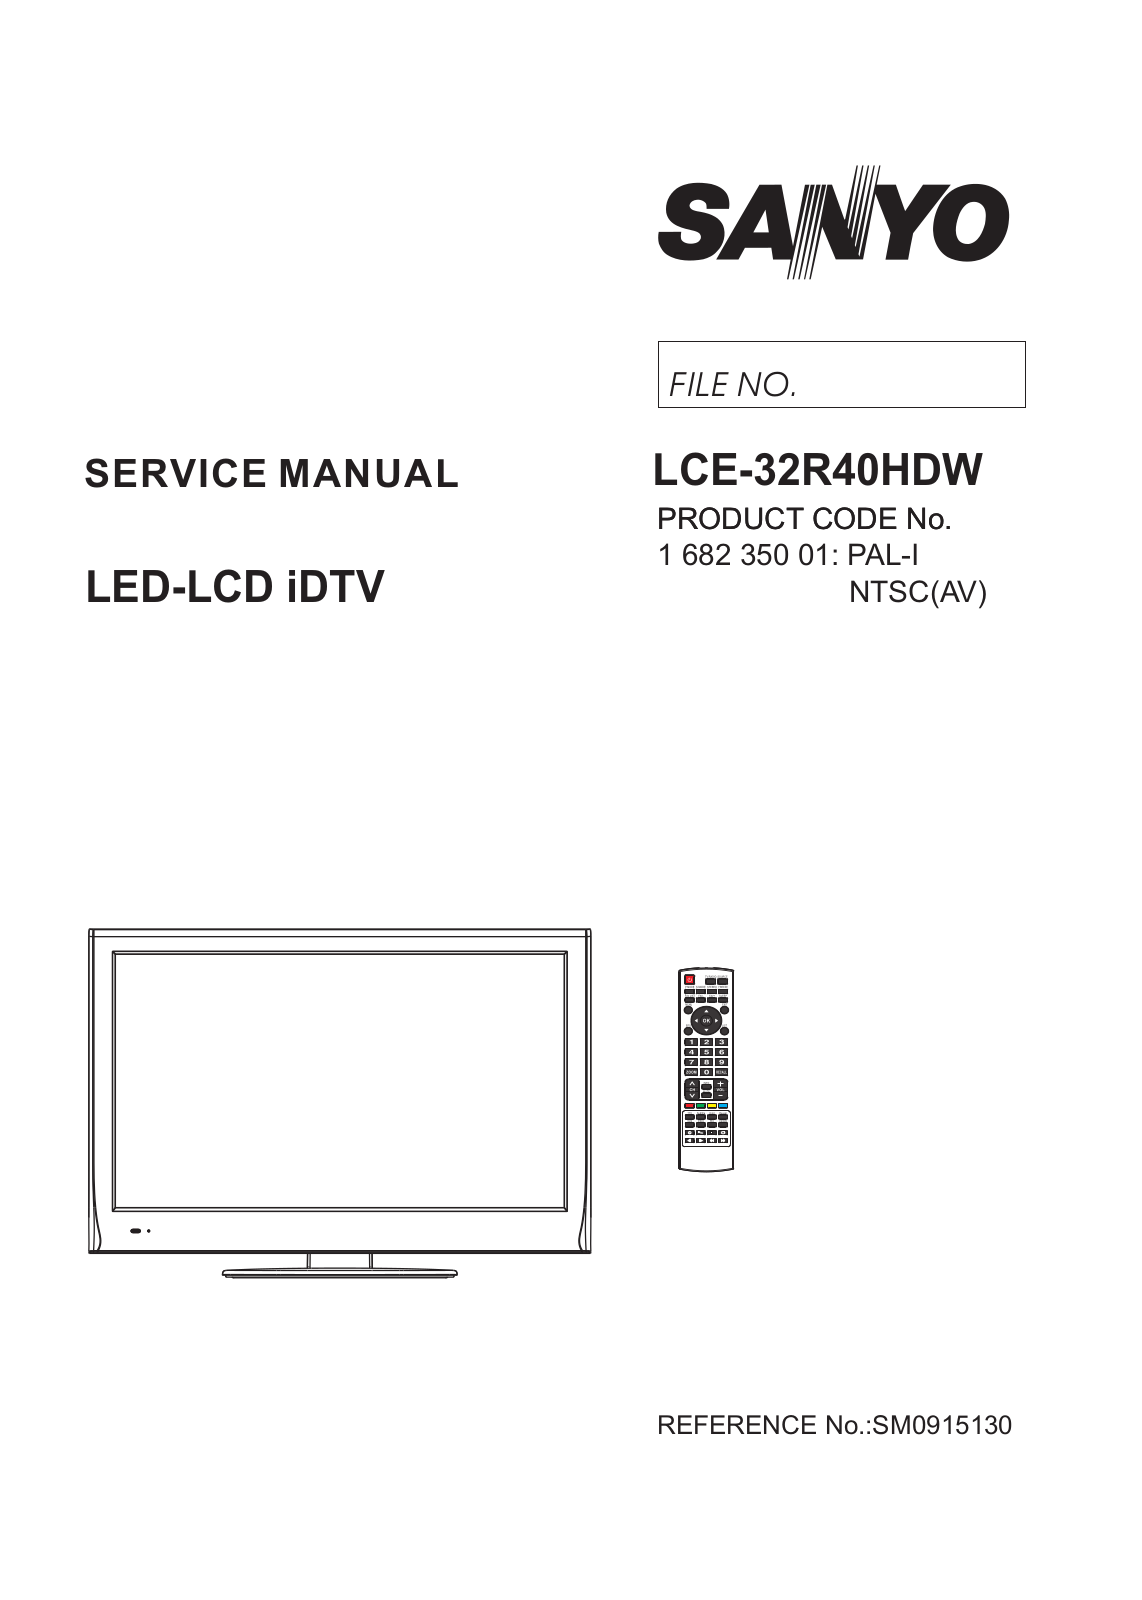 Sanyo LCE-32R40HDW-1 Schematic